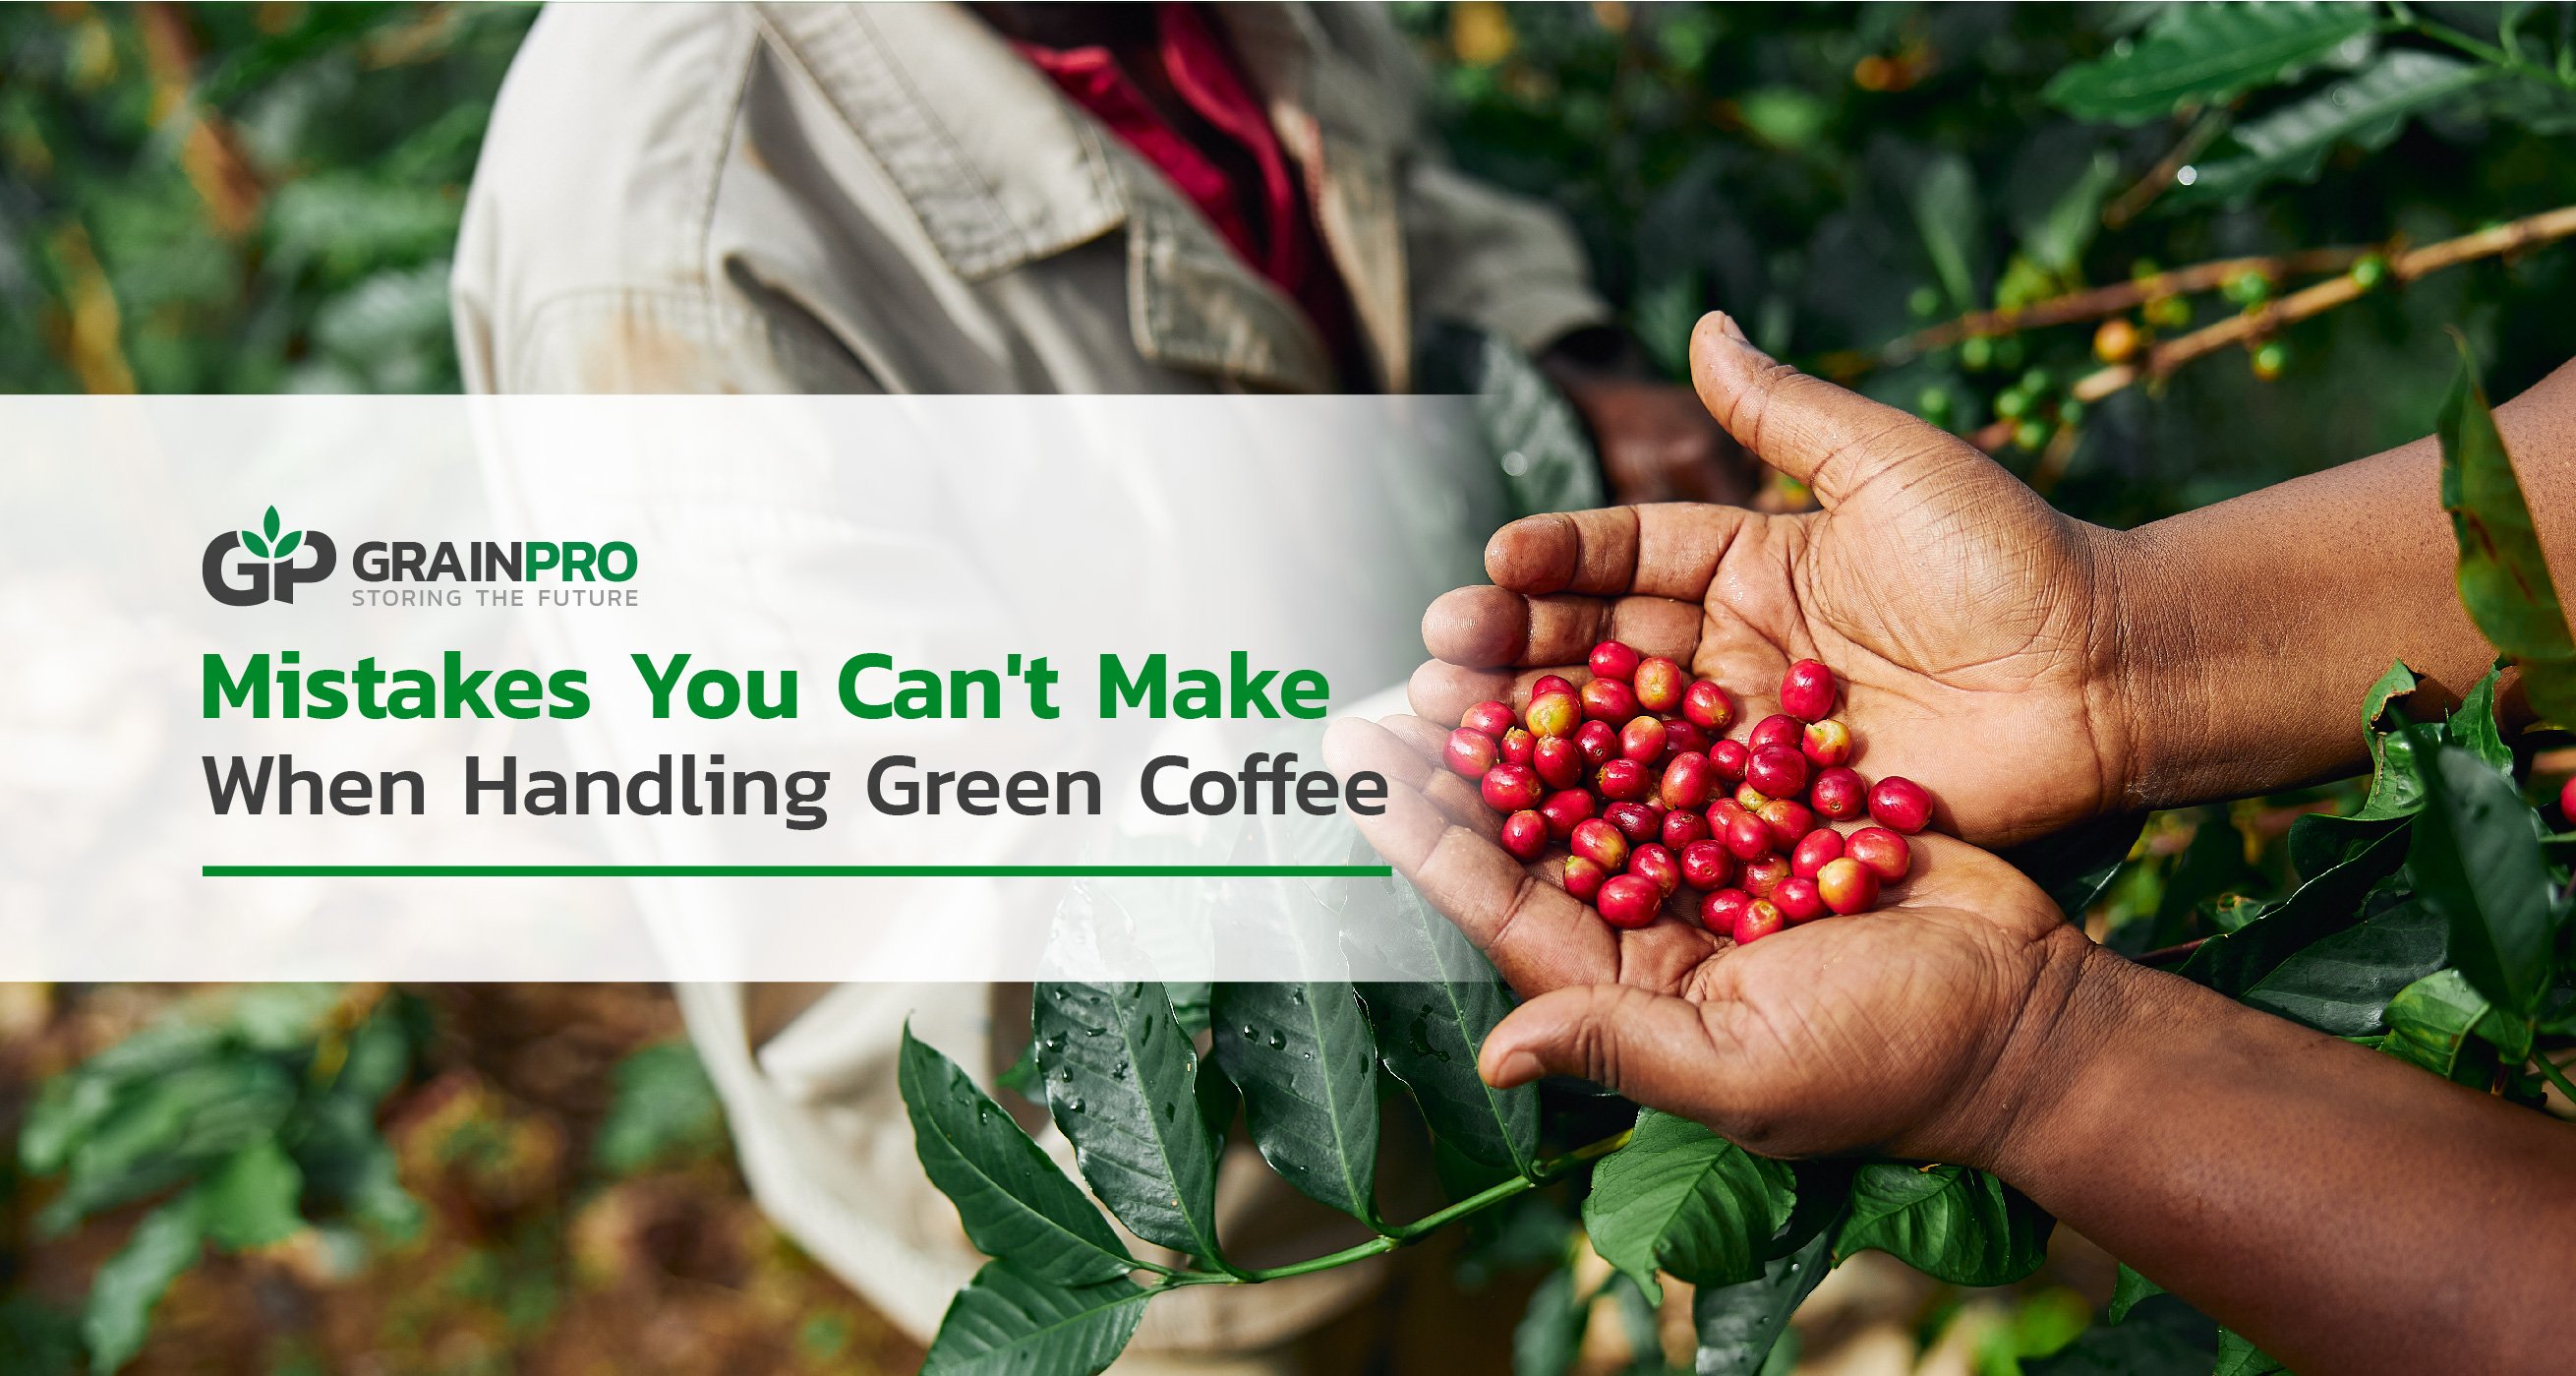 handling green coffee, hermetic technology, green coffee beans